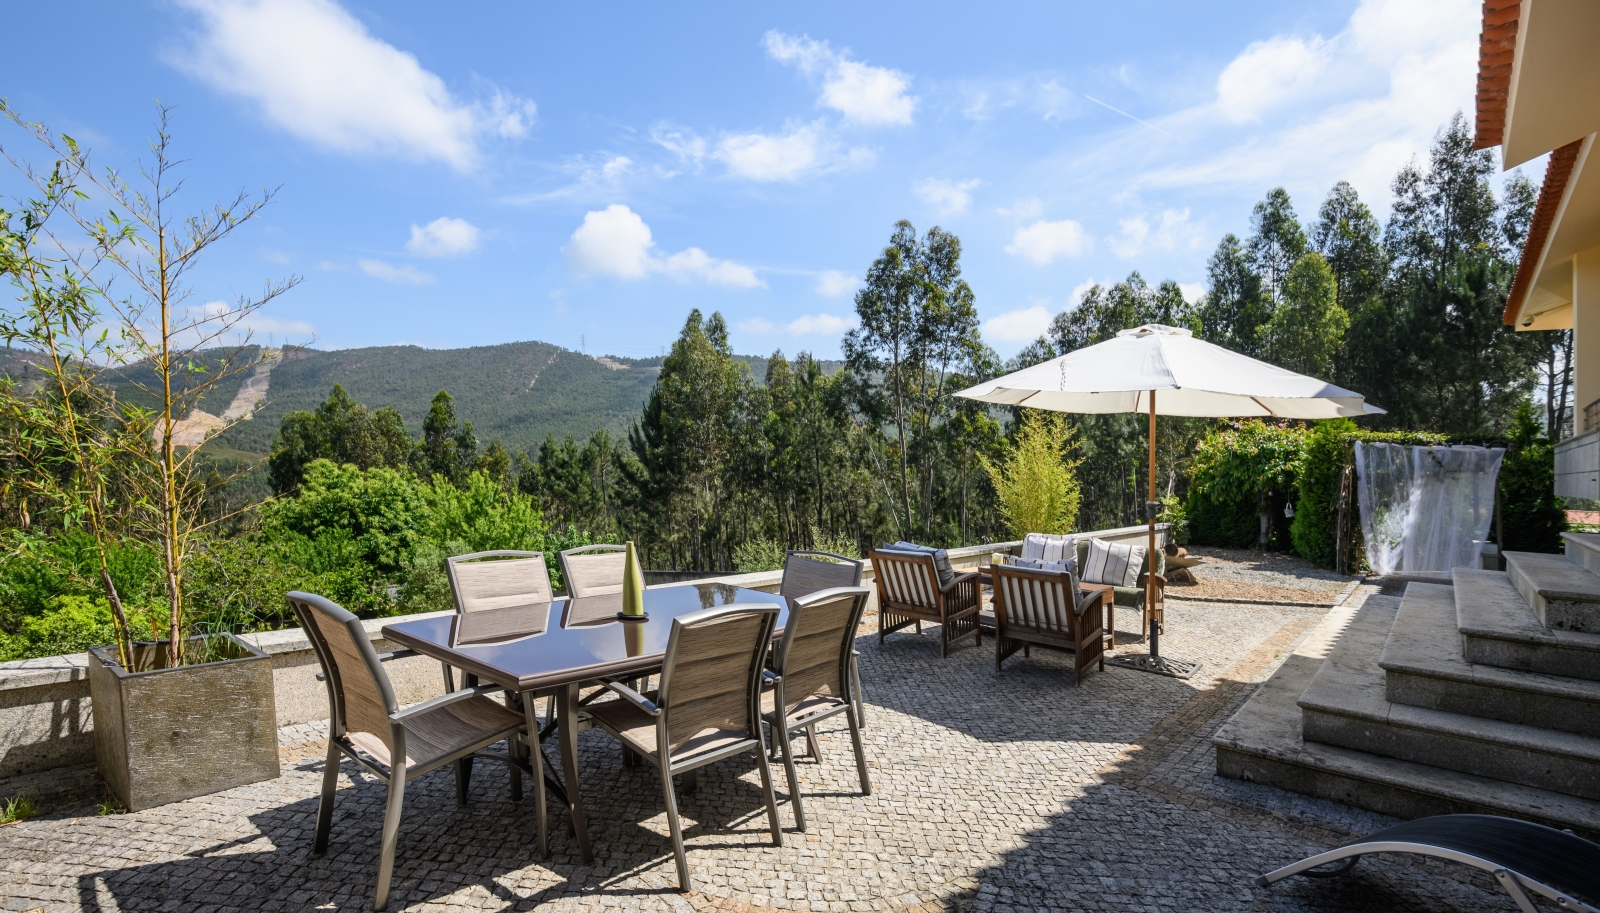 5 bedroom villa with garden and views, for sale, in Foz do Sousa in Gondomar, Porto, Portugal_225224